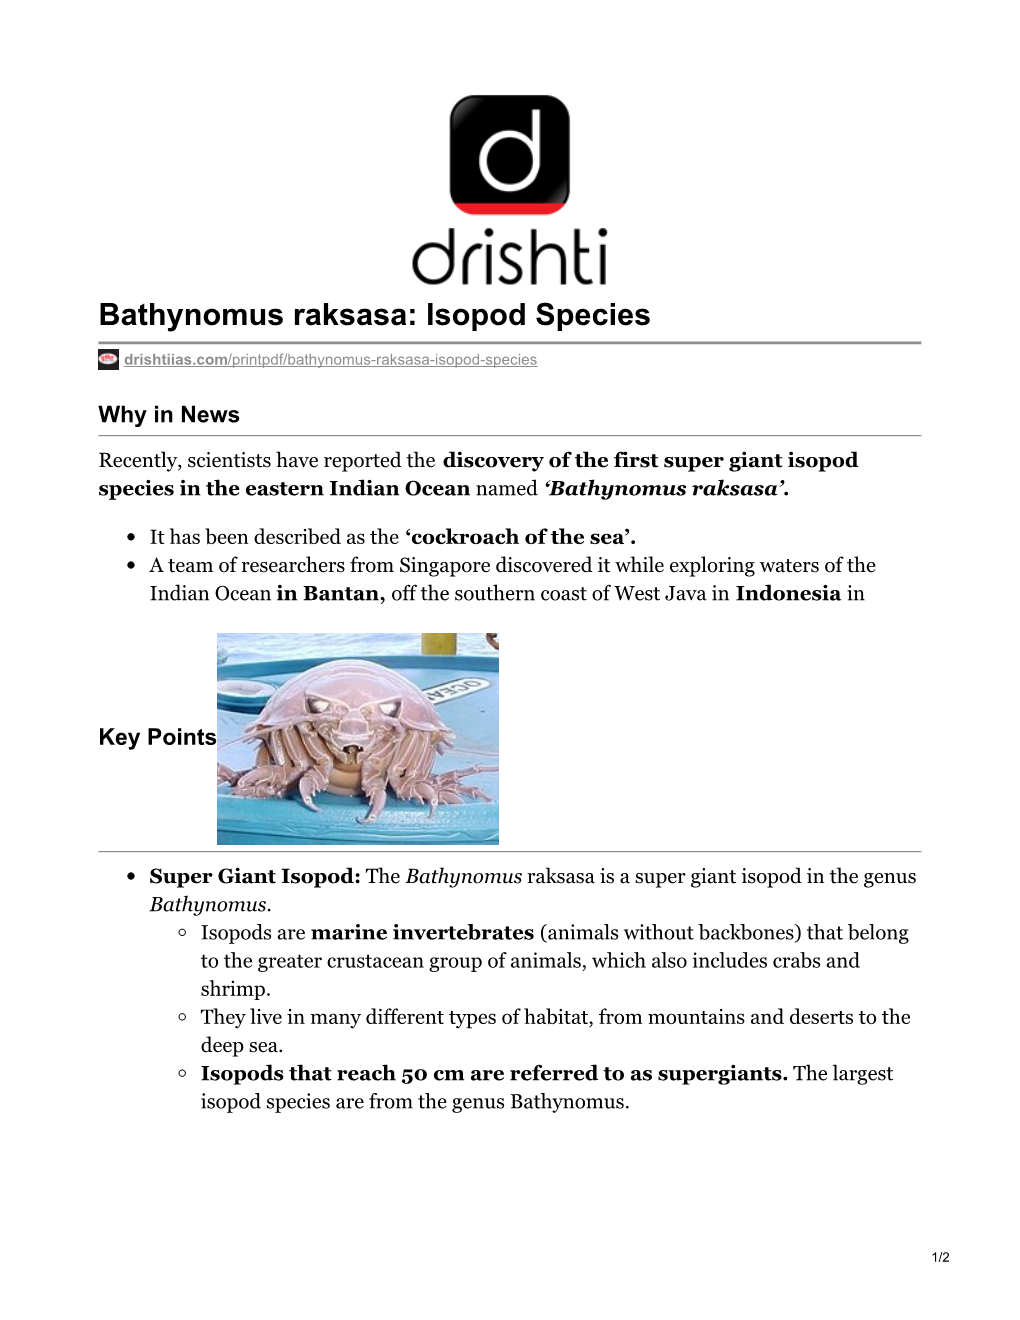 Bathynomus Raksasa: Isopod Species